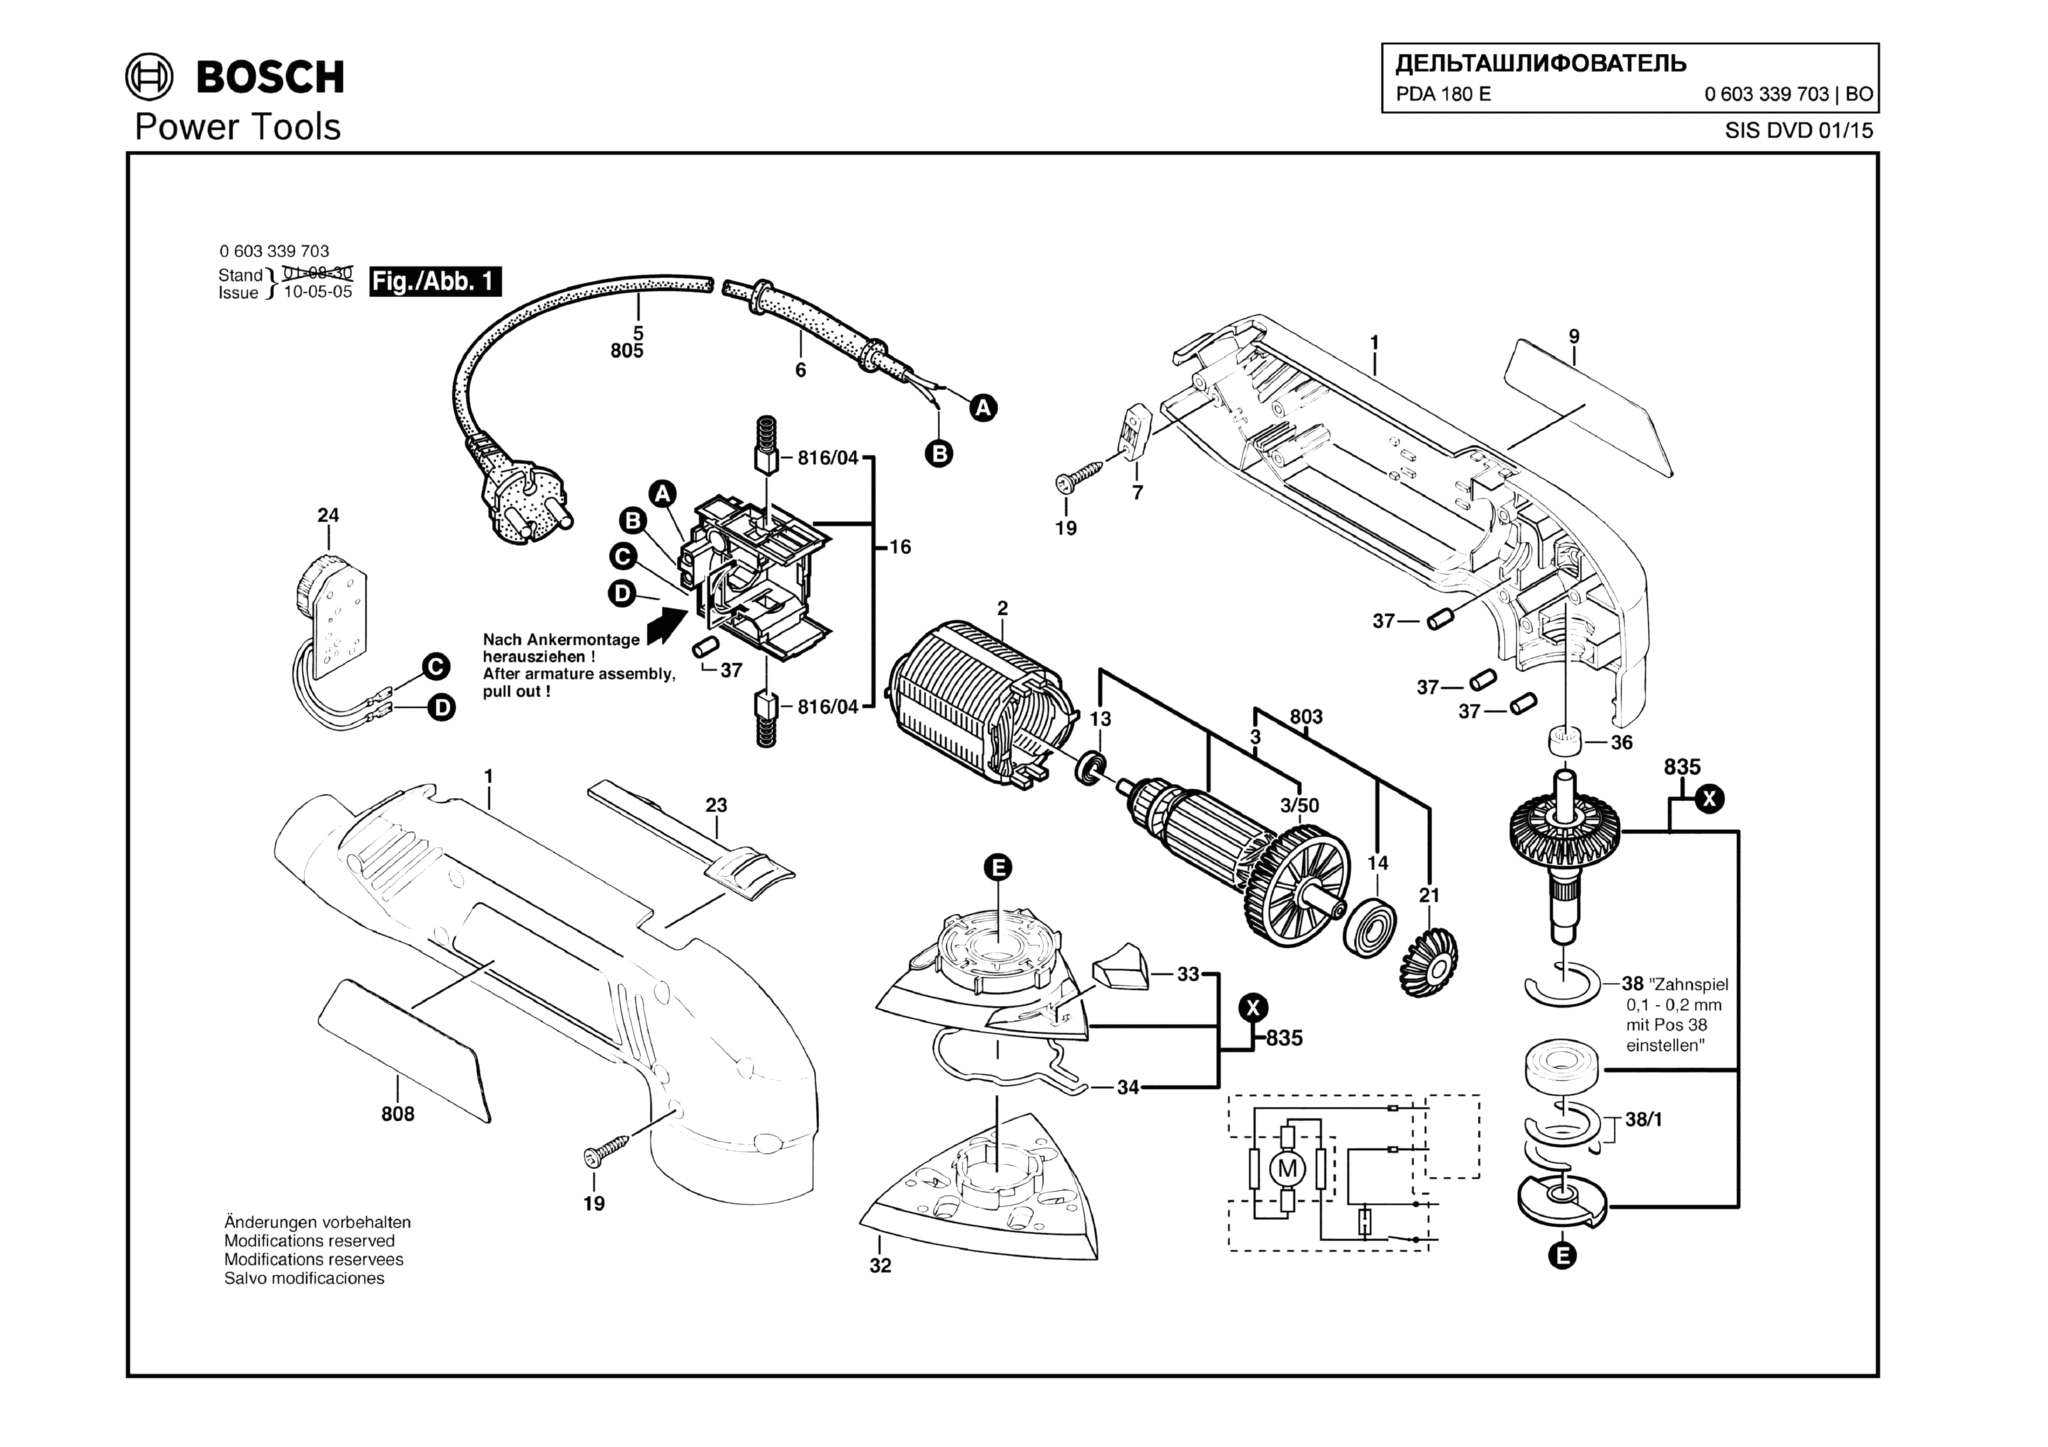 Запчасти, схема и деталировка Bosch PDA 180 E (ТИП 0603339703)